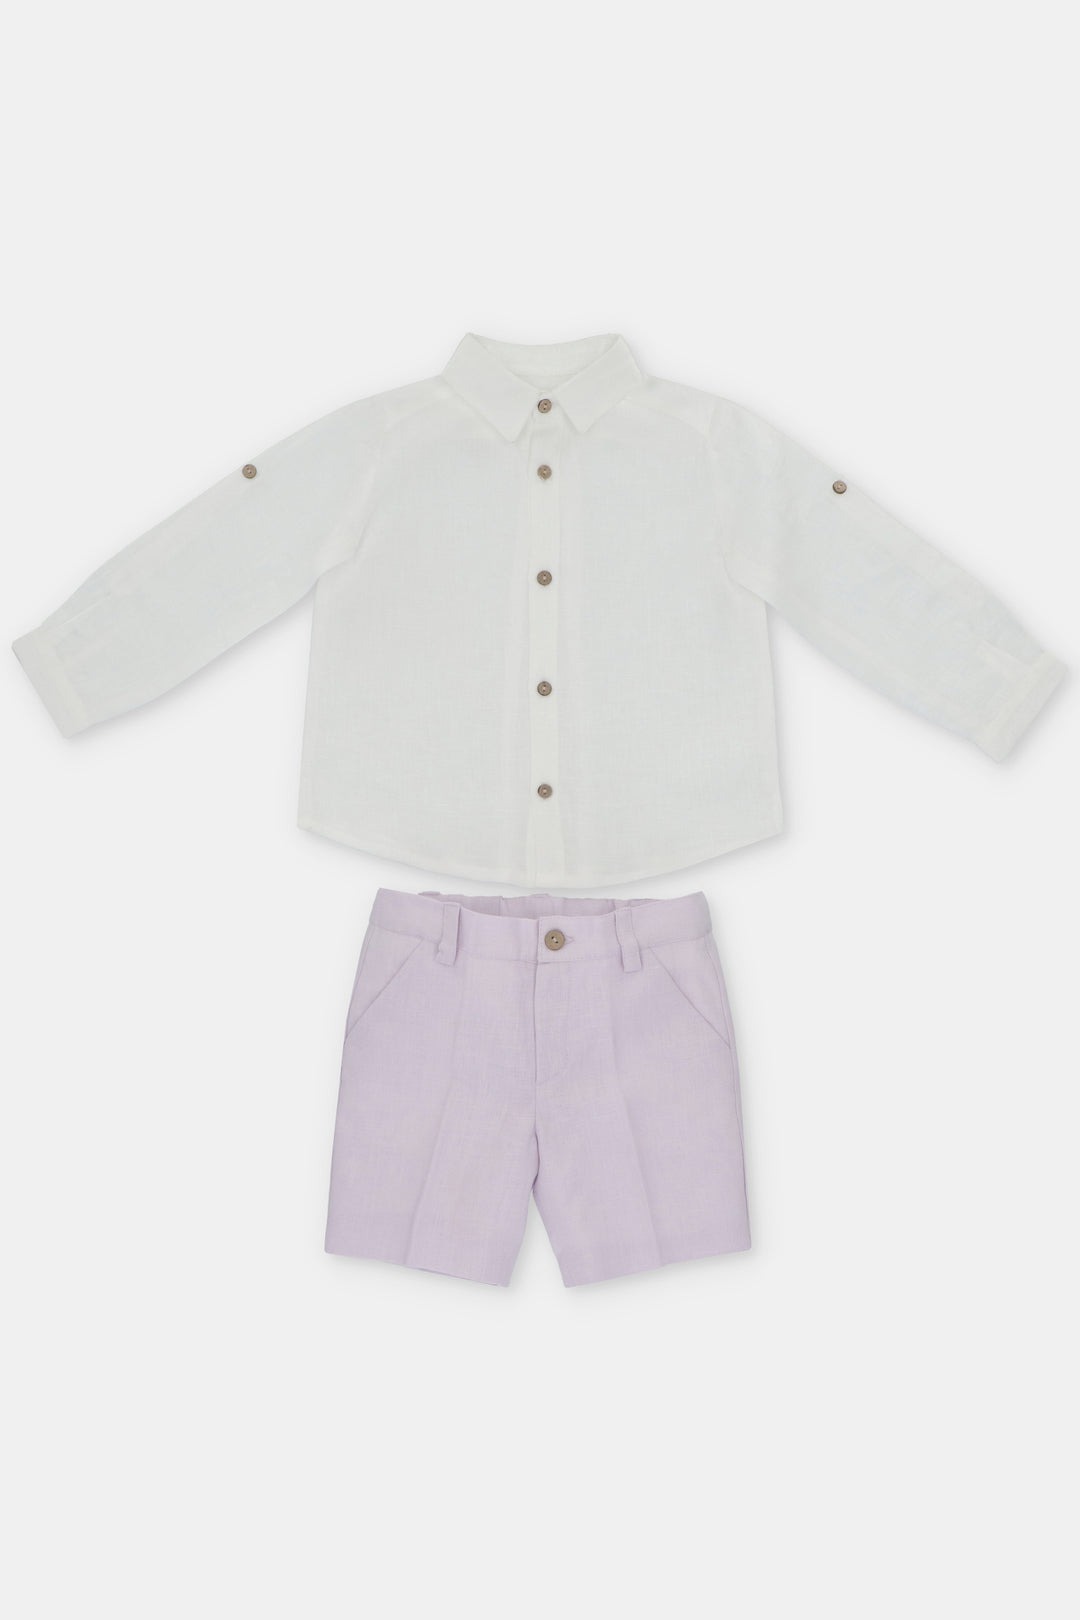 Martín Aranda "Wilbur" Lavender Shirt & Shorts | Millie and John